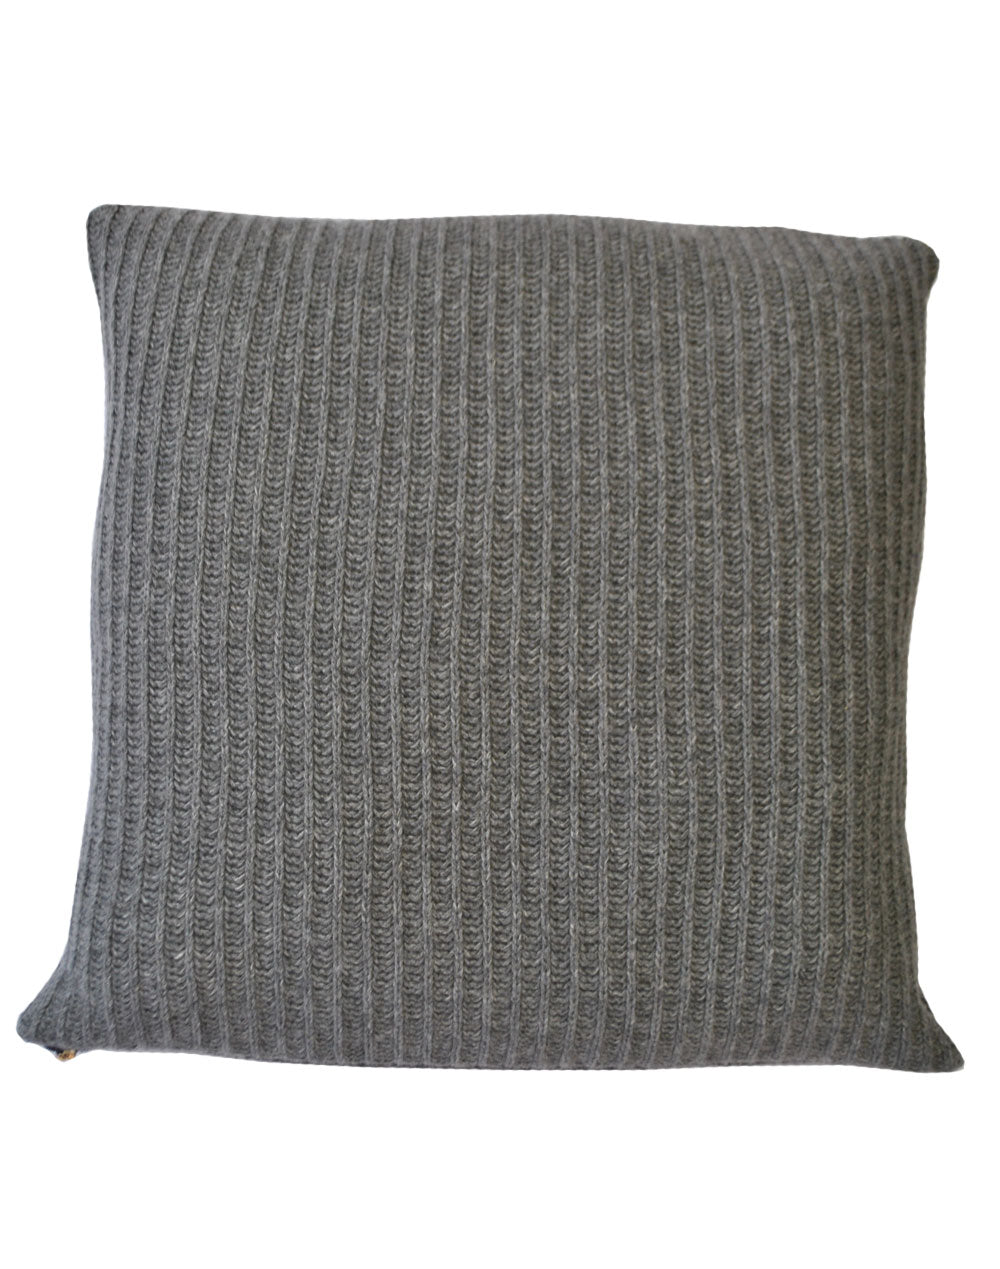 English knit cushion